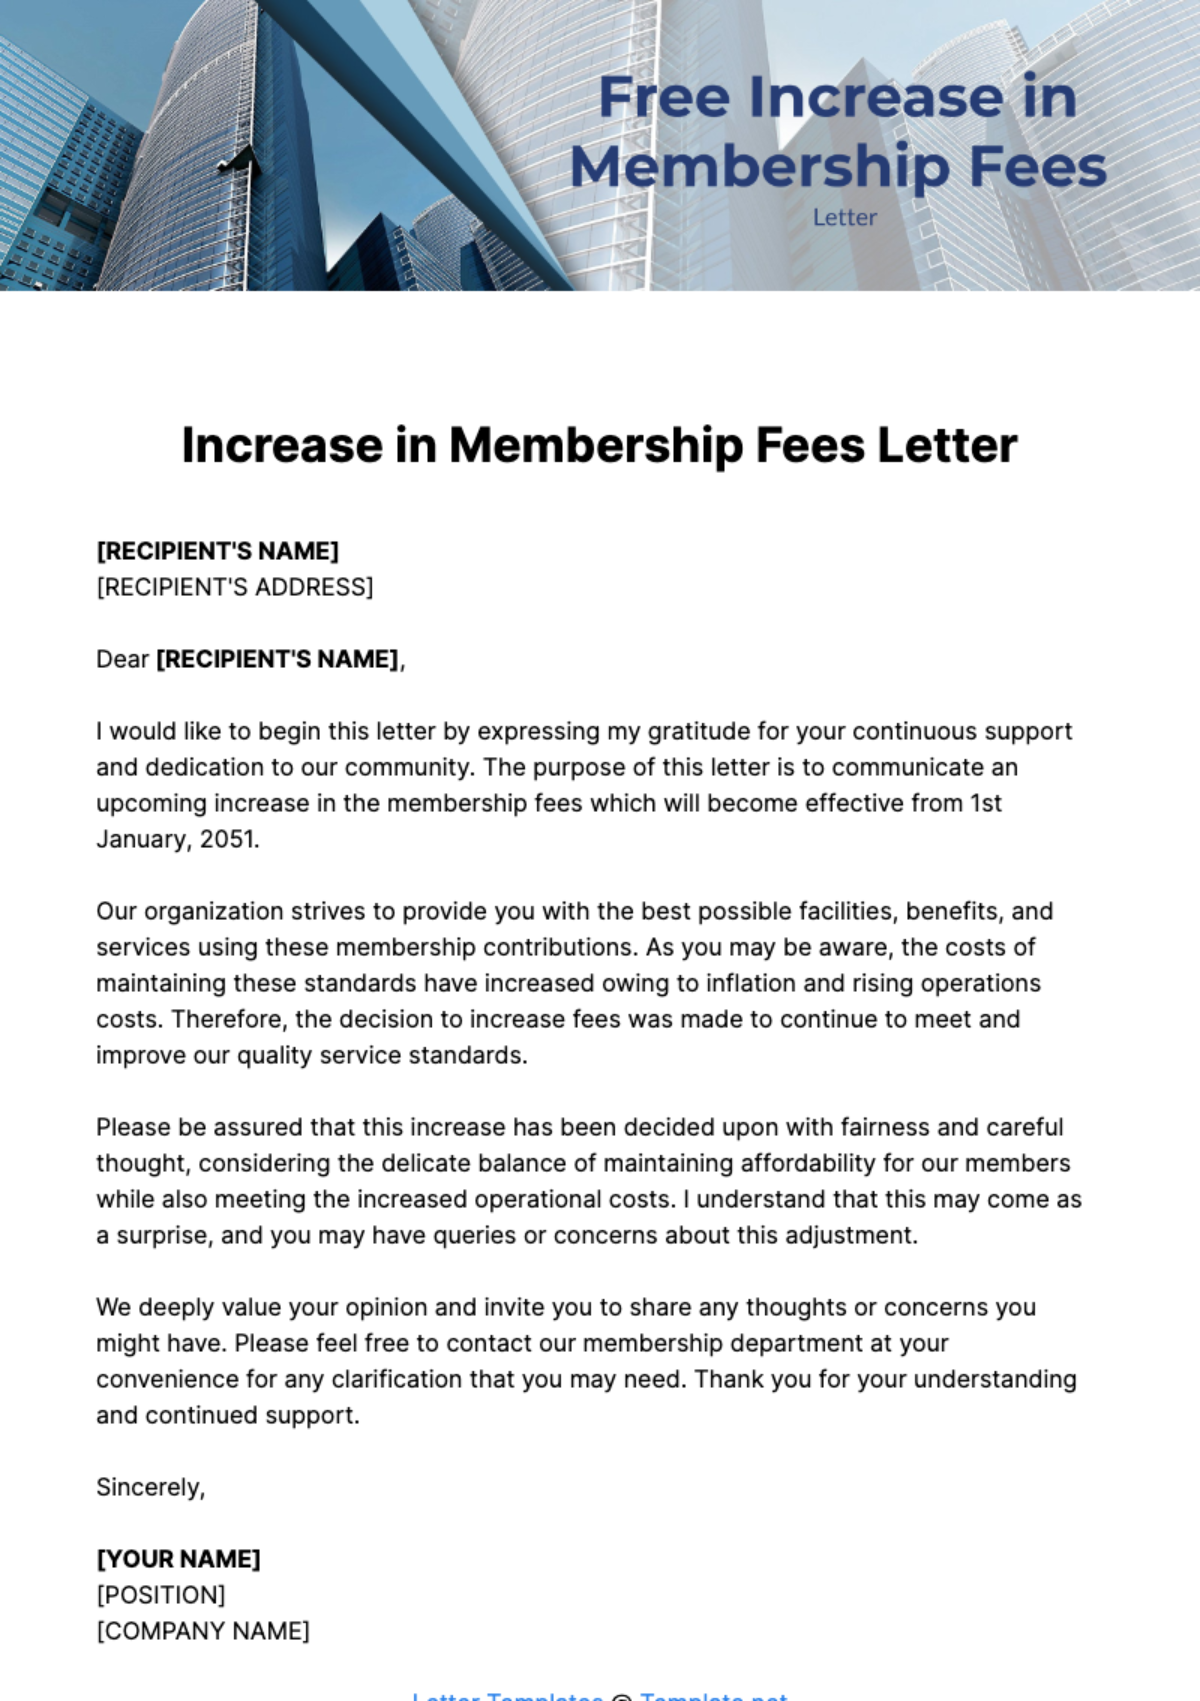 Free Increase in Membership Fees Letter Template